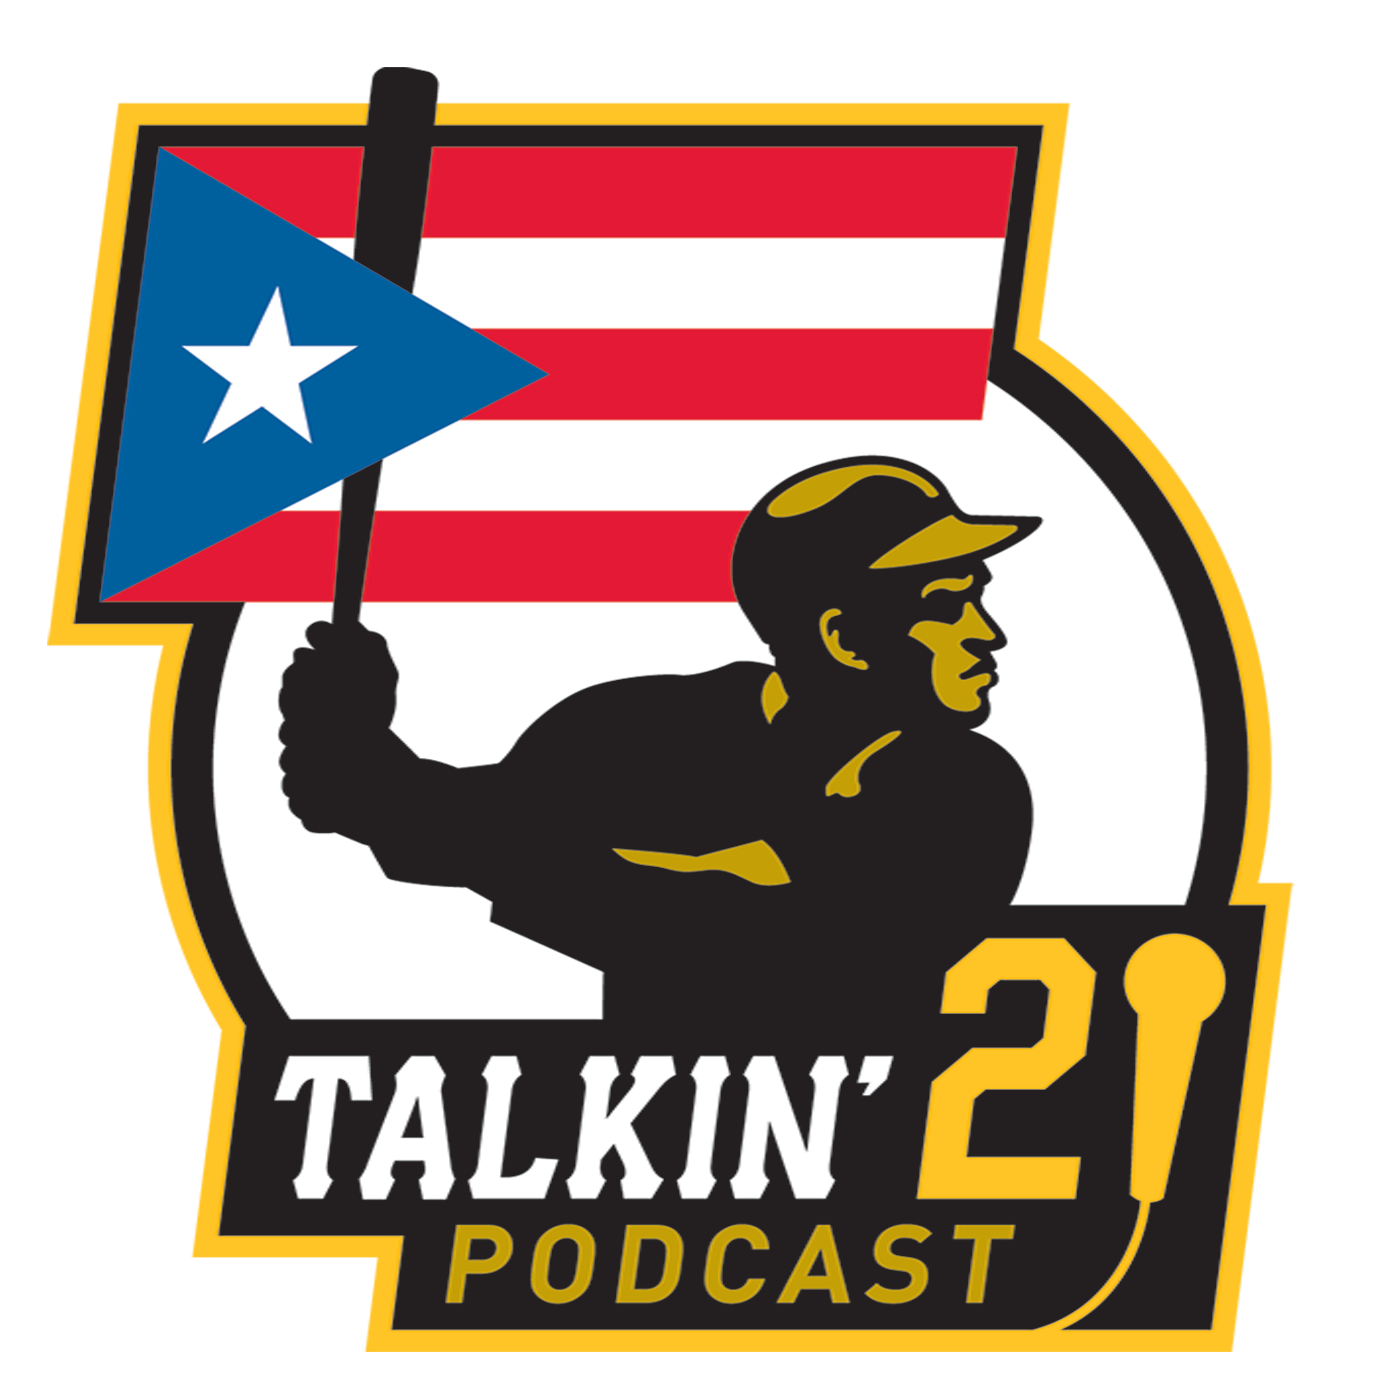 Talkin' 21 Podcast - COMING SOON